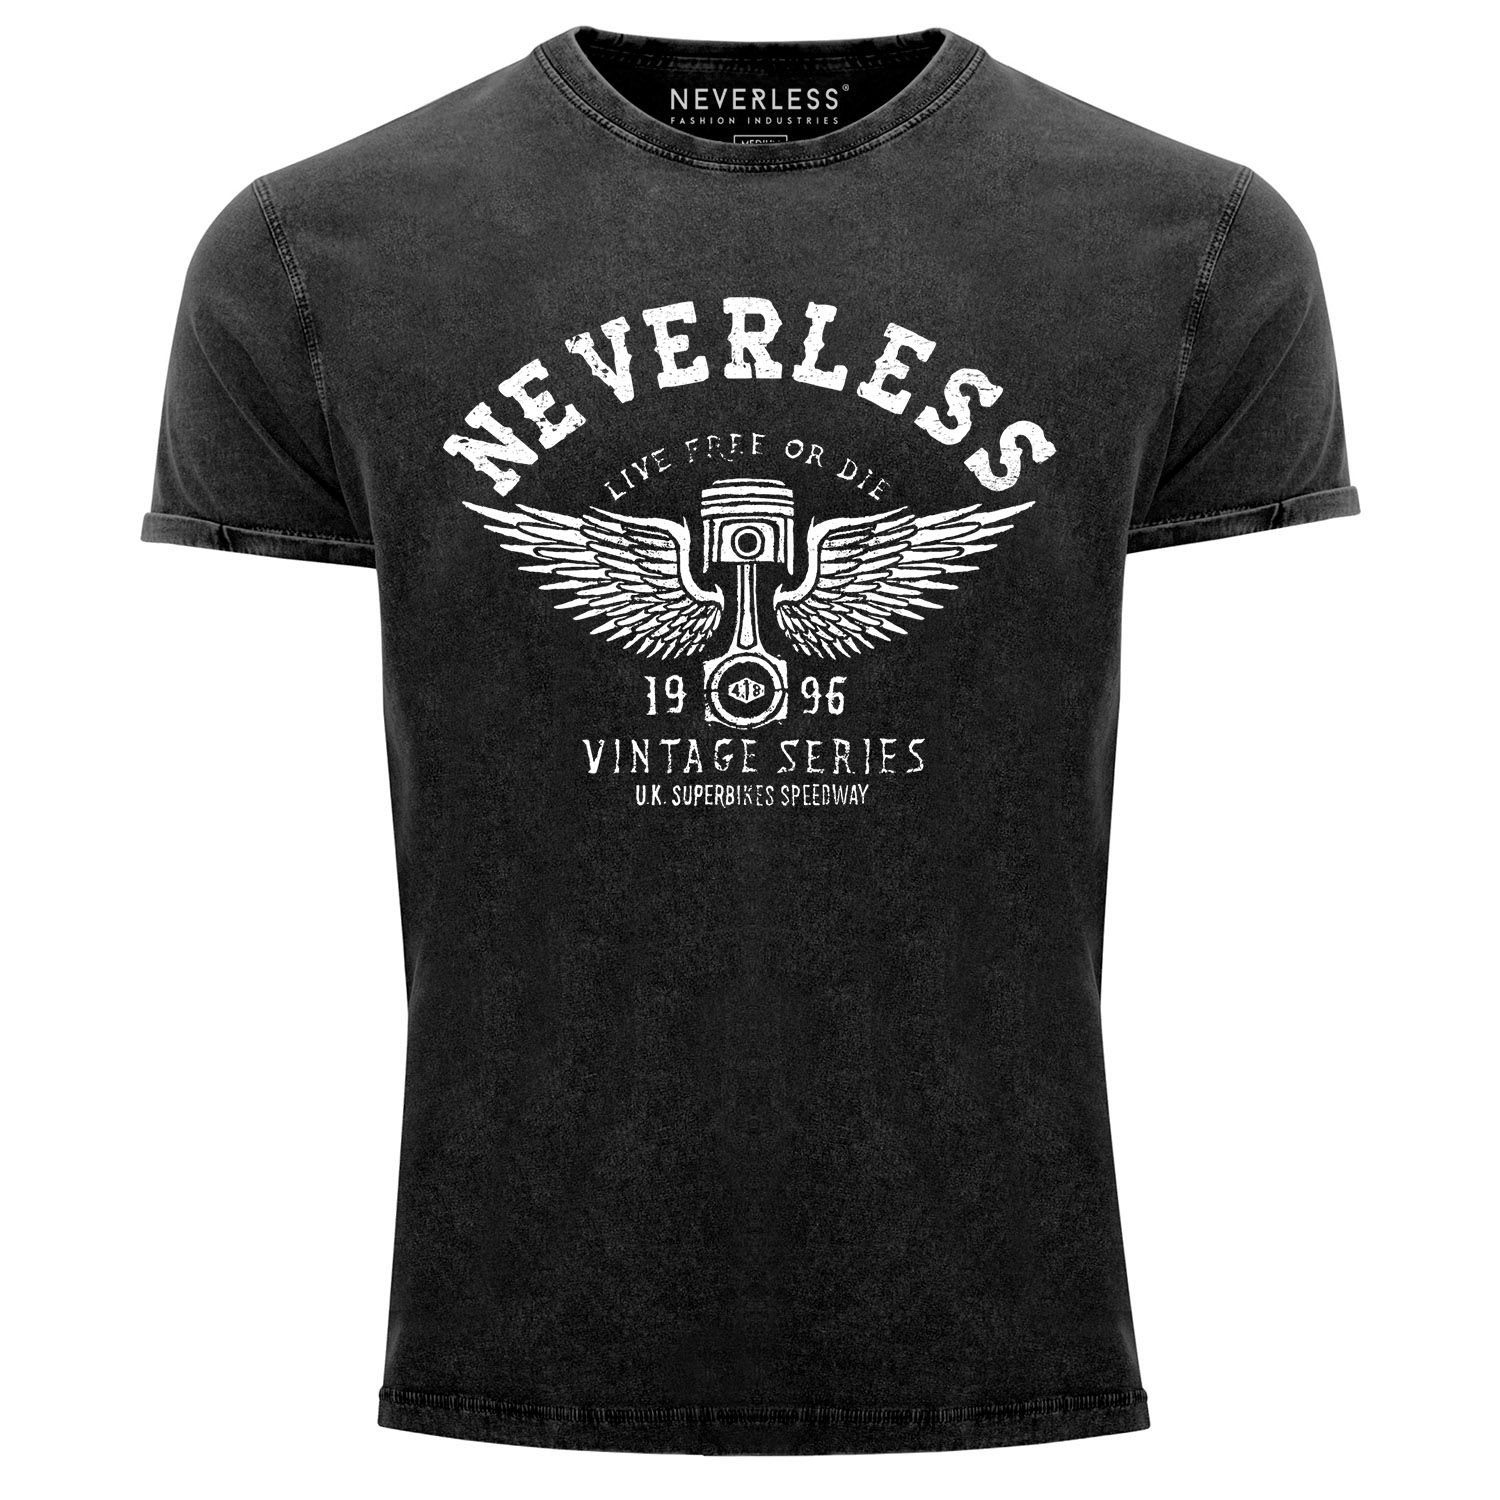 Neverless Print-Shirt Cooles Angesagtes Herren T-Shirt Vintage Shirt Retro Auto Kolben Used Look Slim Fit Neverless® mit Print schwarz | T-Shirts